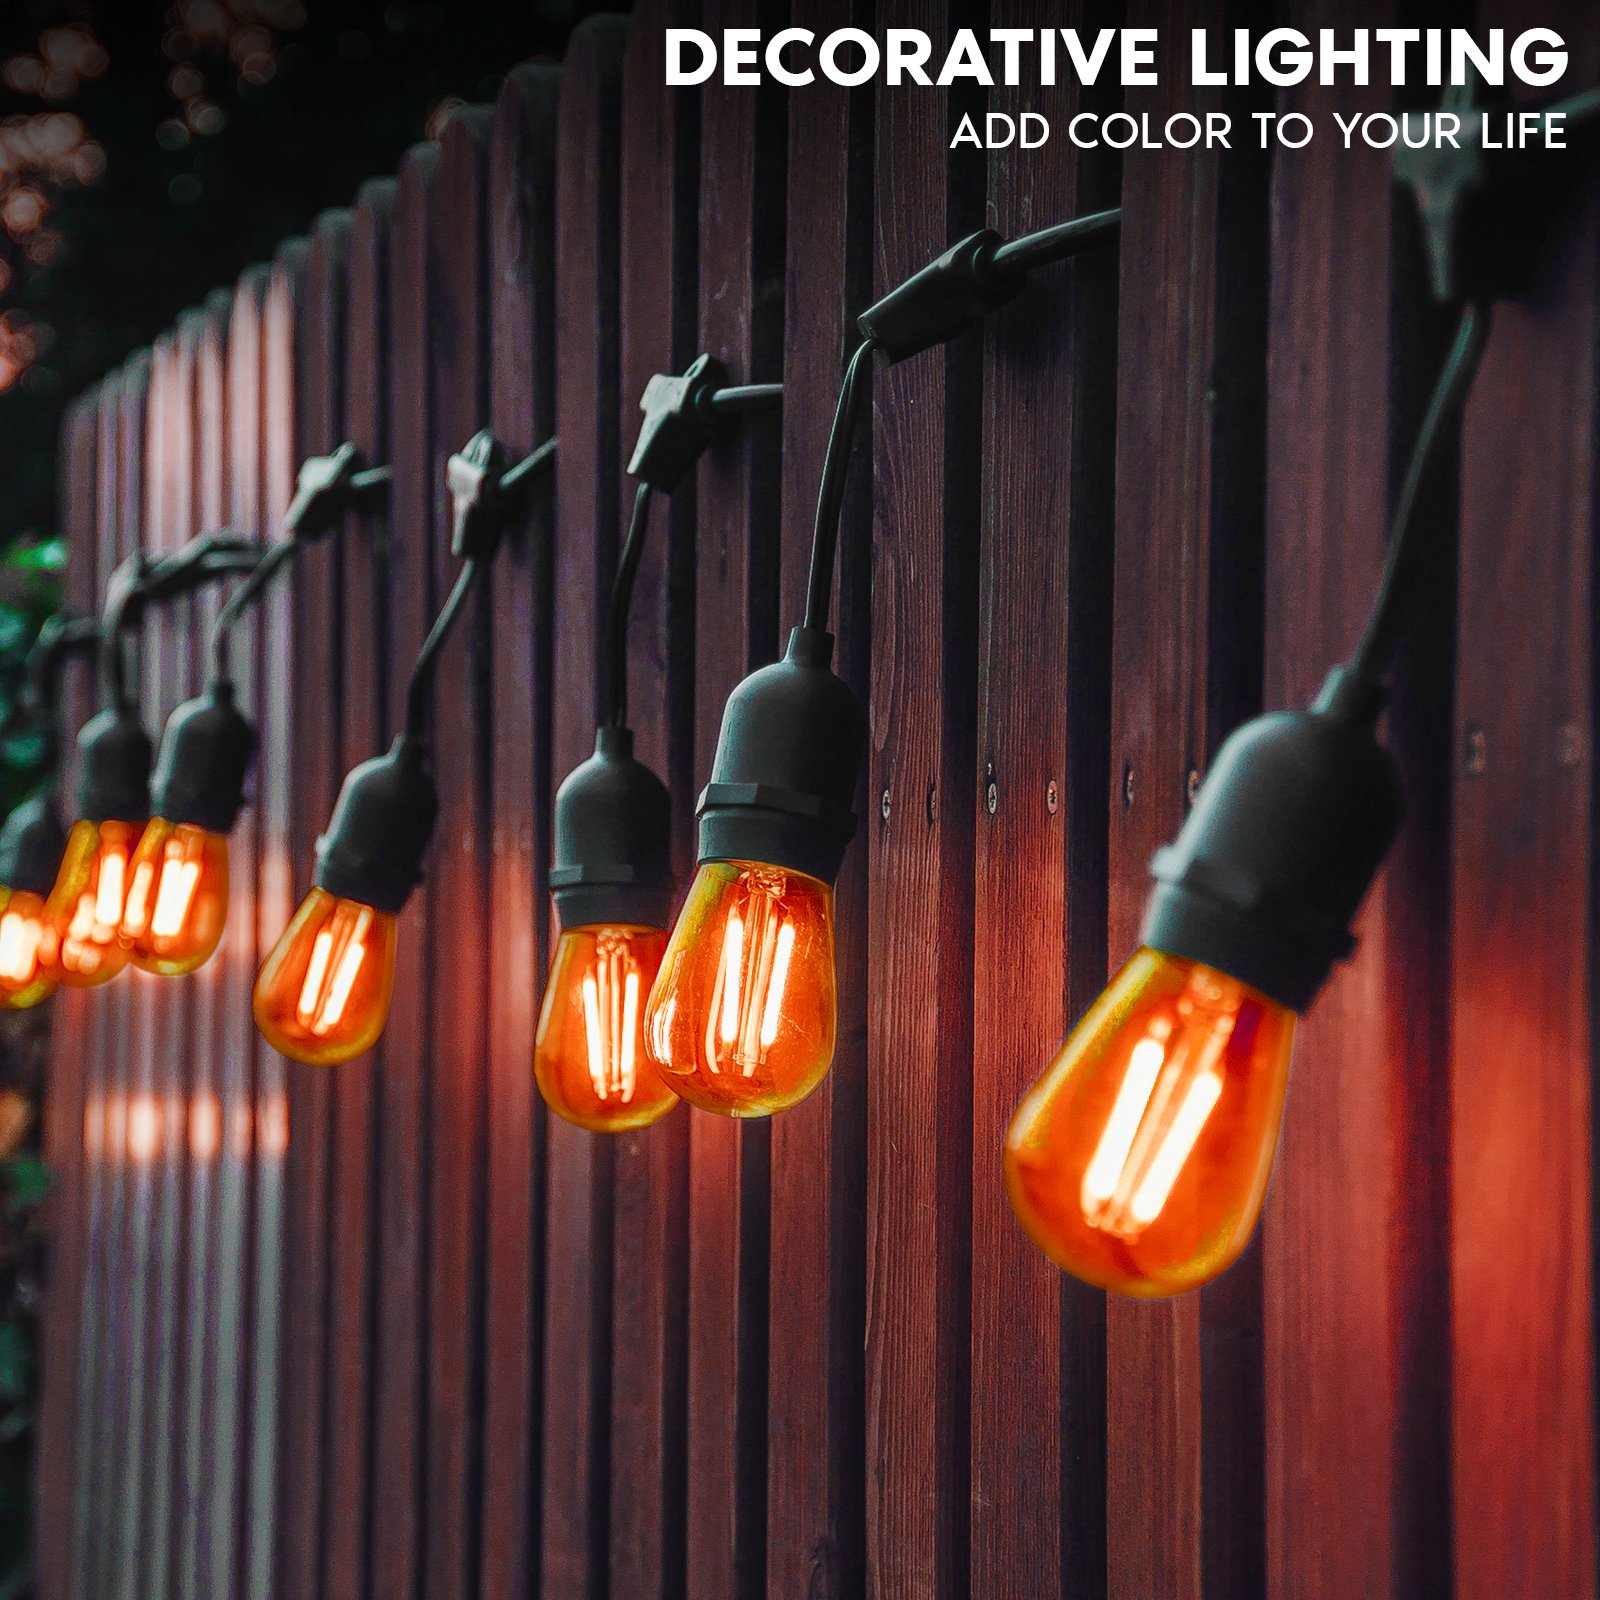 Luxrite S14 Edison LED Orange Light Bulb 0.5W Colored LED Bulbs for Outdoor  String Lights UL Listed E26 Base Pack